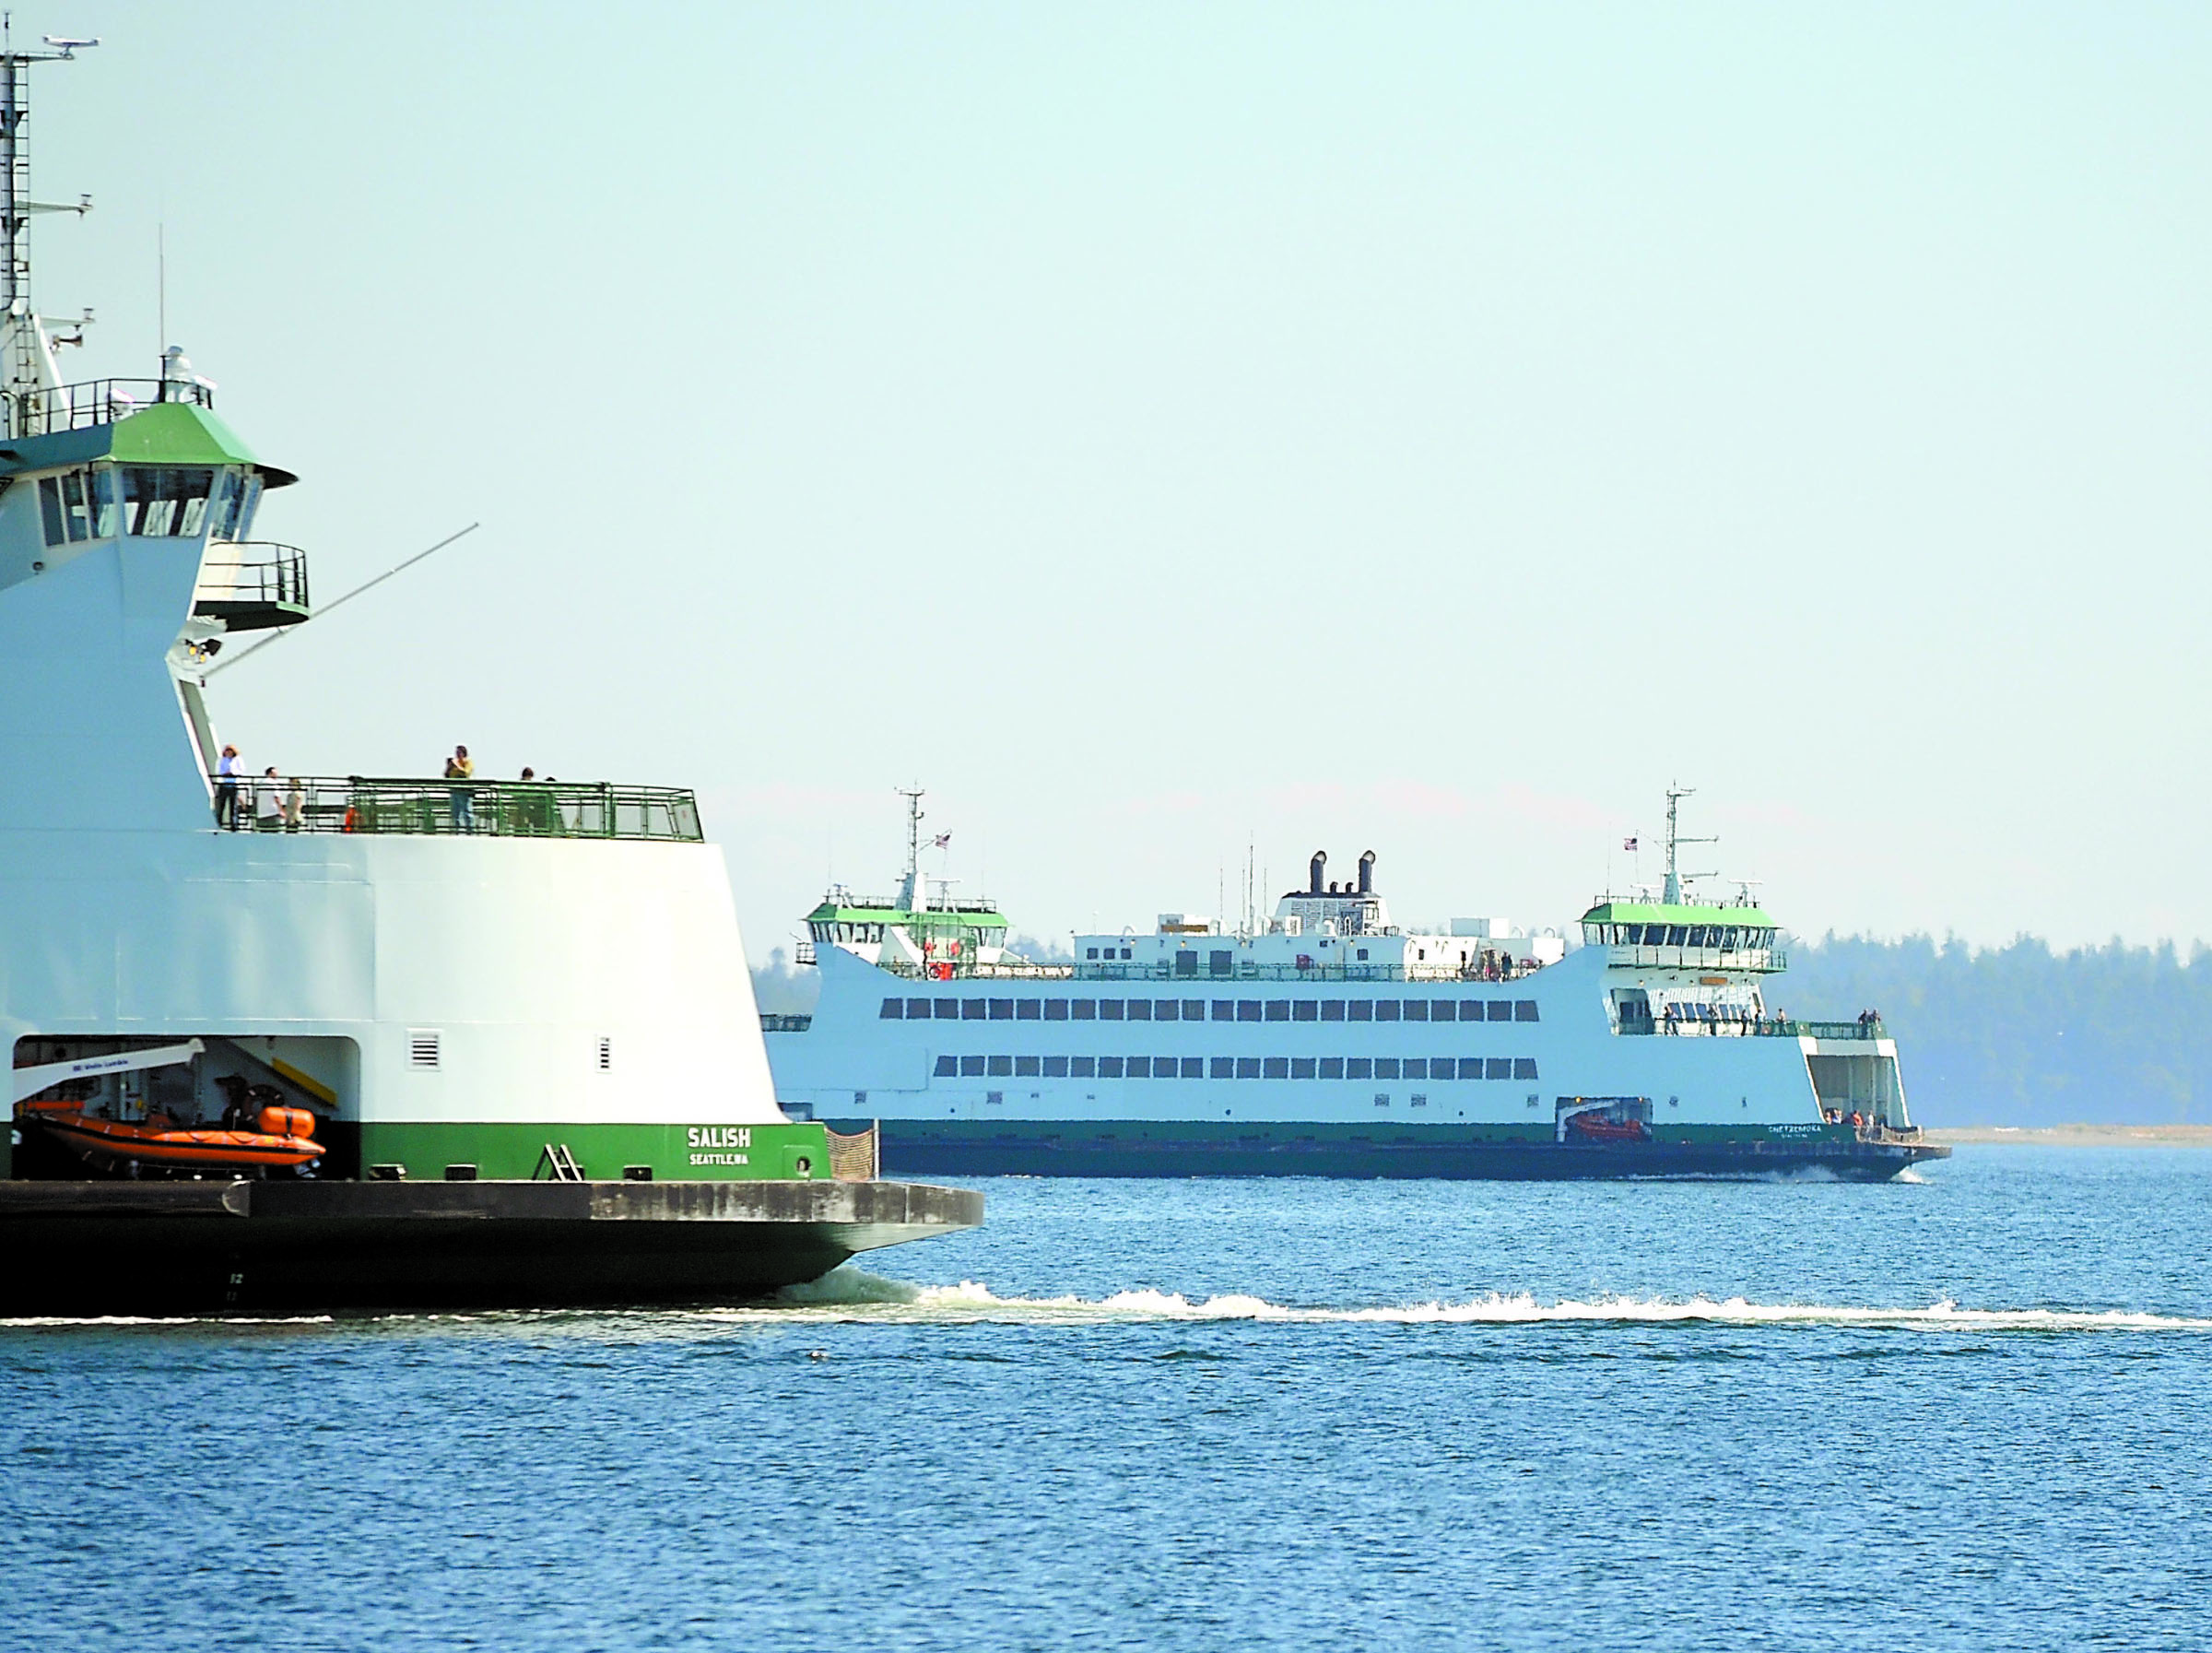 The MV Chetzemoka passes by its sister ship